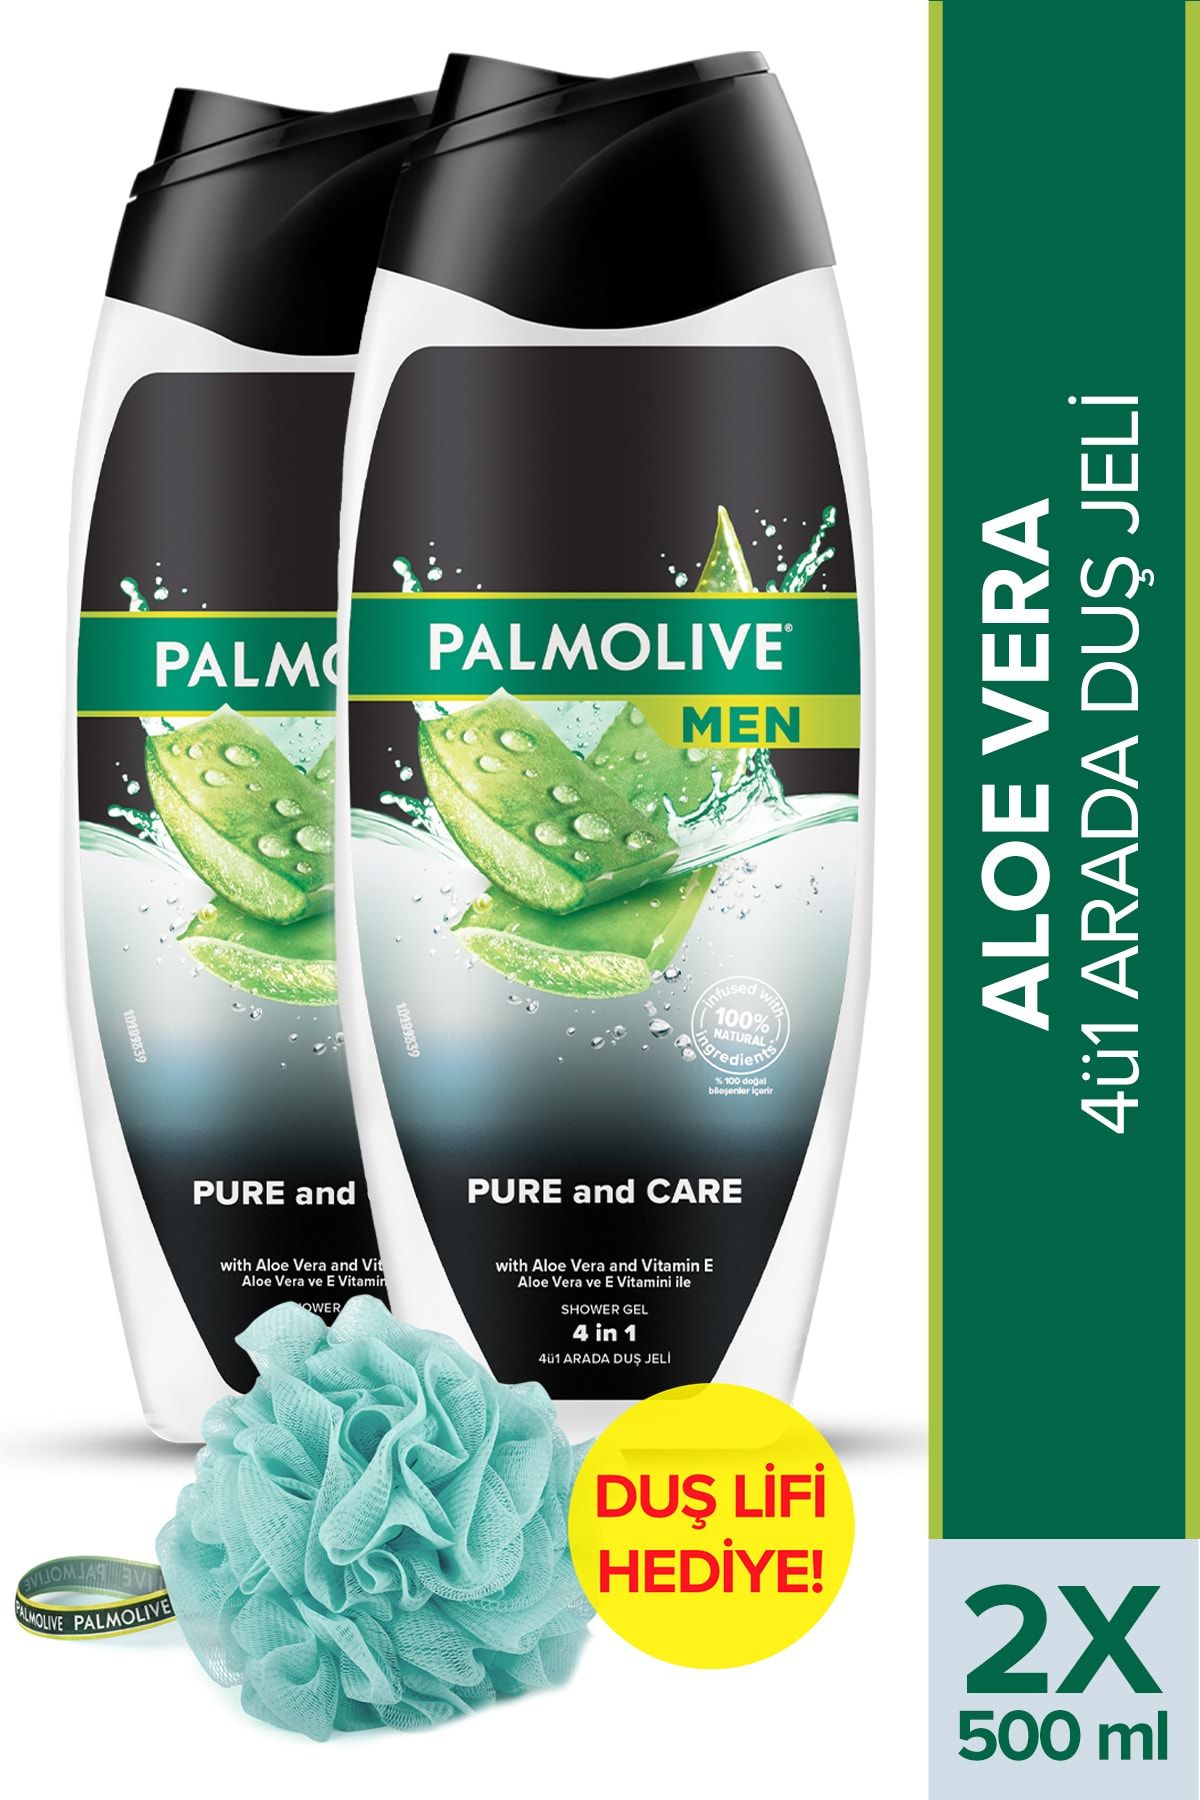 Palmolive Men Pure and Care Aloe Vera ve E Vitamini ile Duş Jeli 500 ml x2 Adet + Duş Lifi Hediye